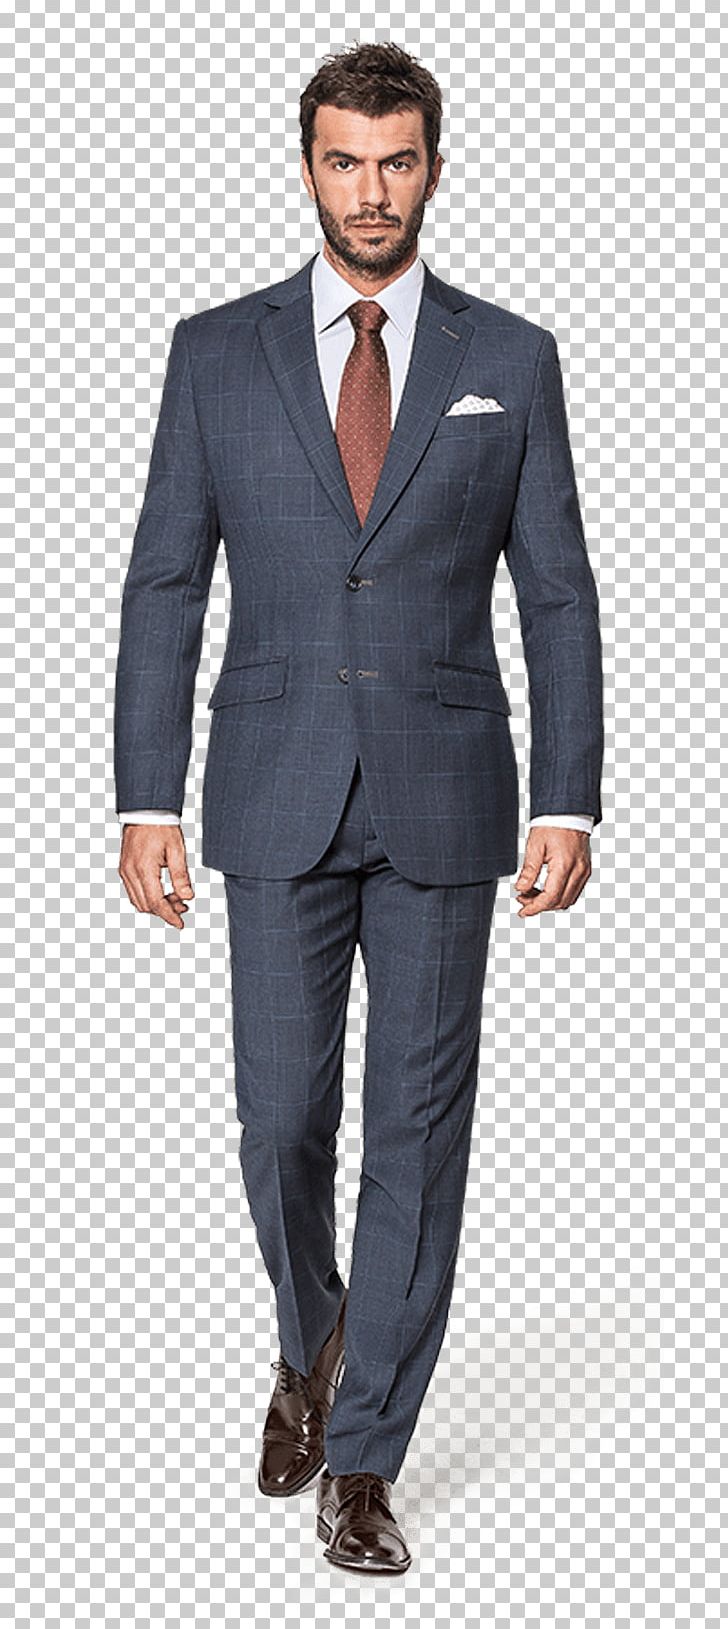 Suit Online Shopping Tuxedo Navy Blue PNG, Clipart, Blauer Kamp, Blazer, Blue, Business, Businessperson Free PNG Download